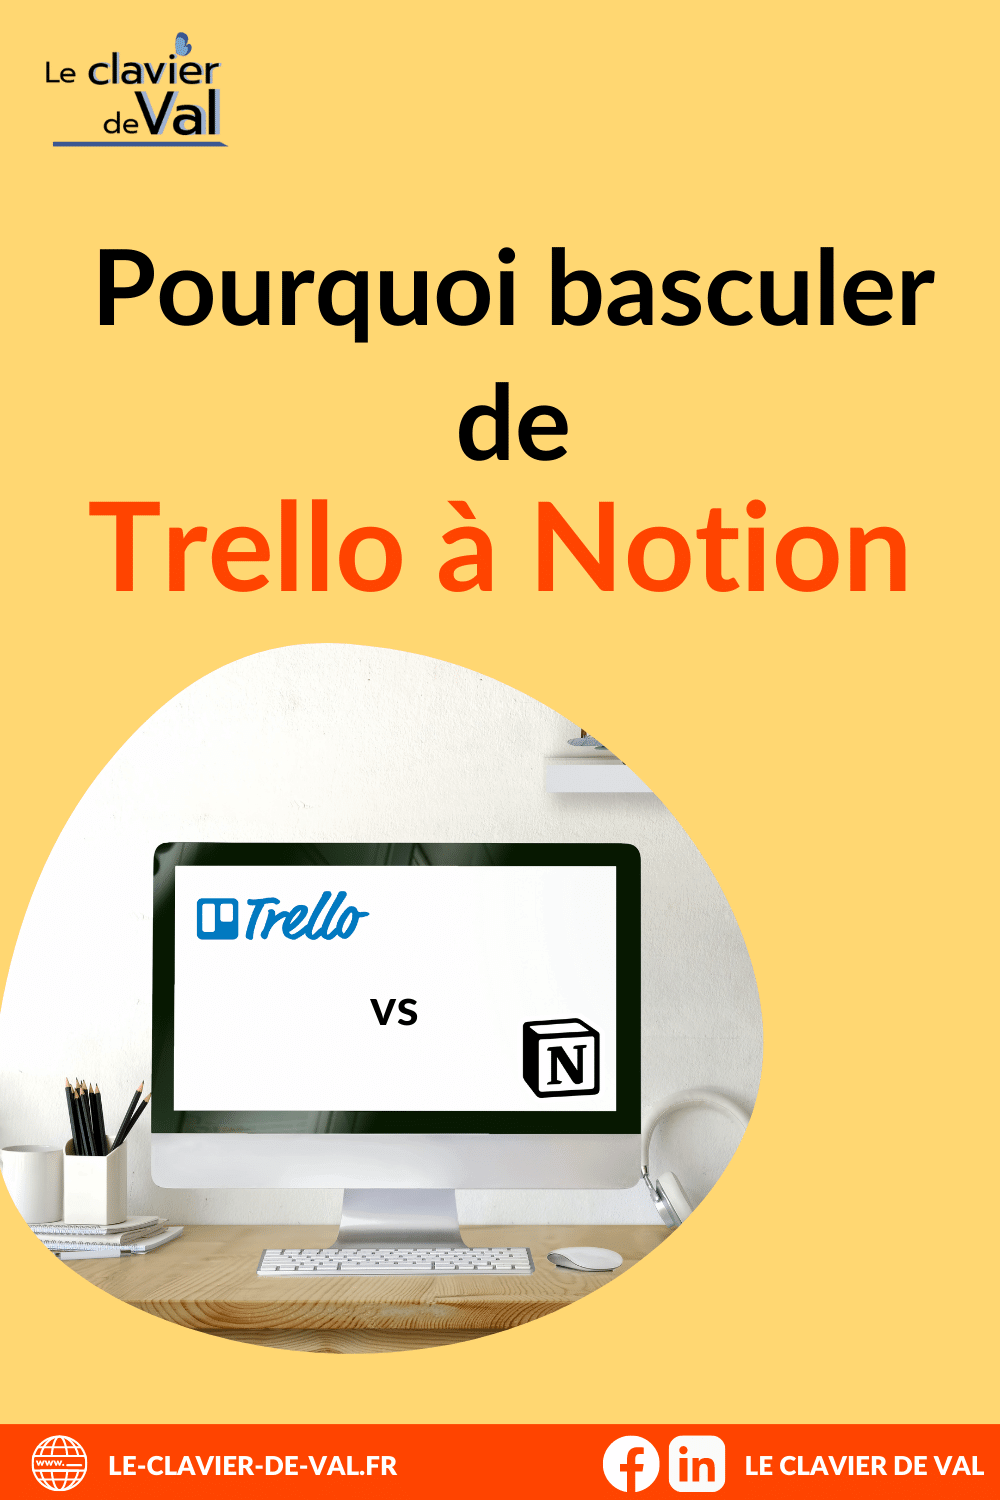 Utiliser Trello ou Notion ? épingle Pinterest